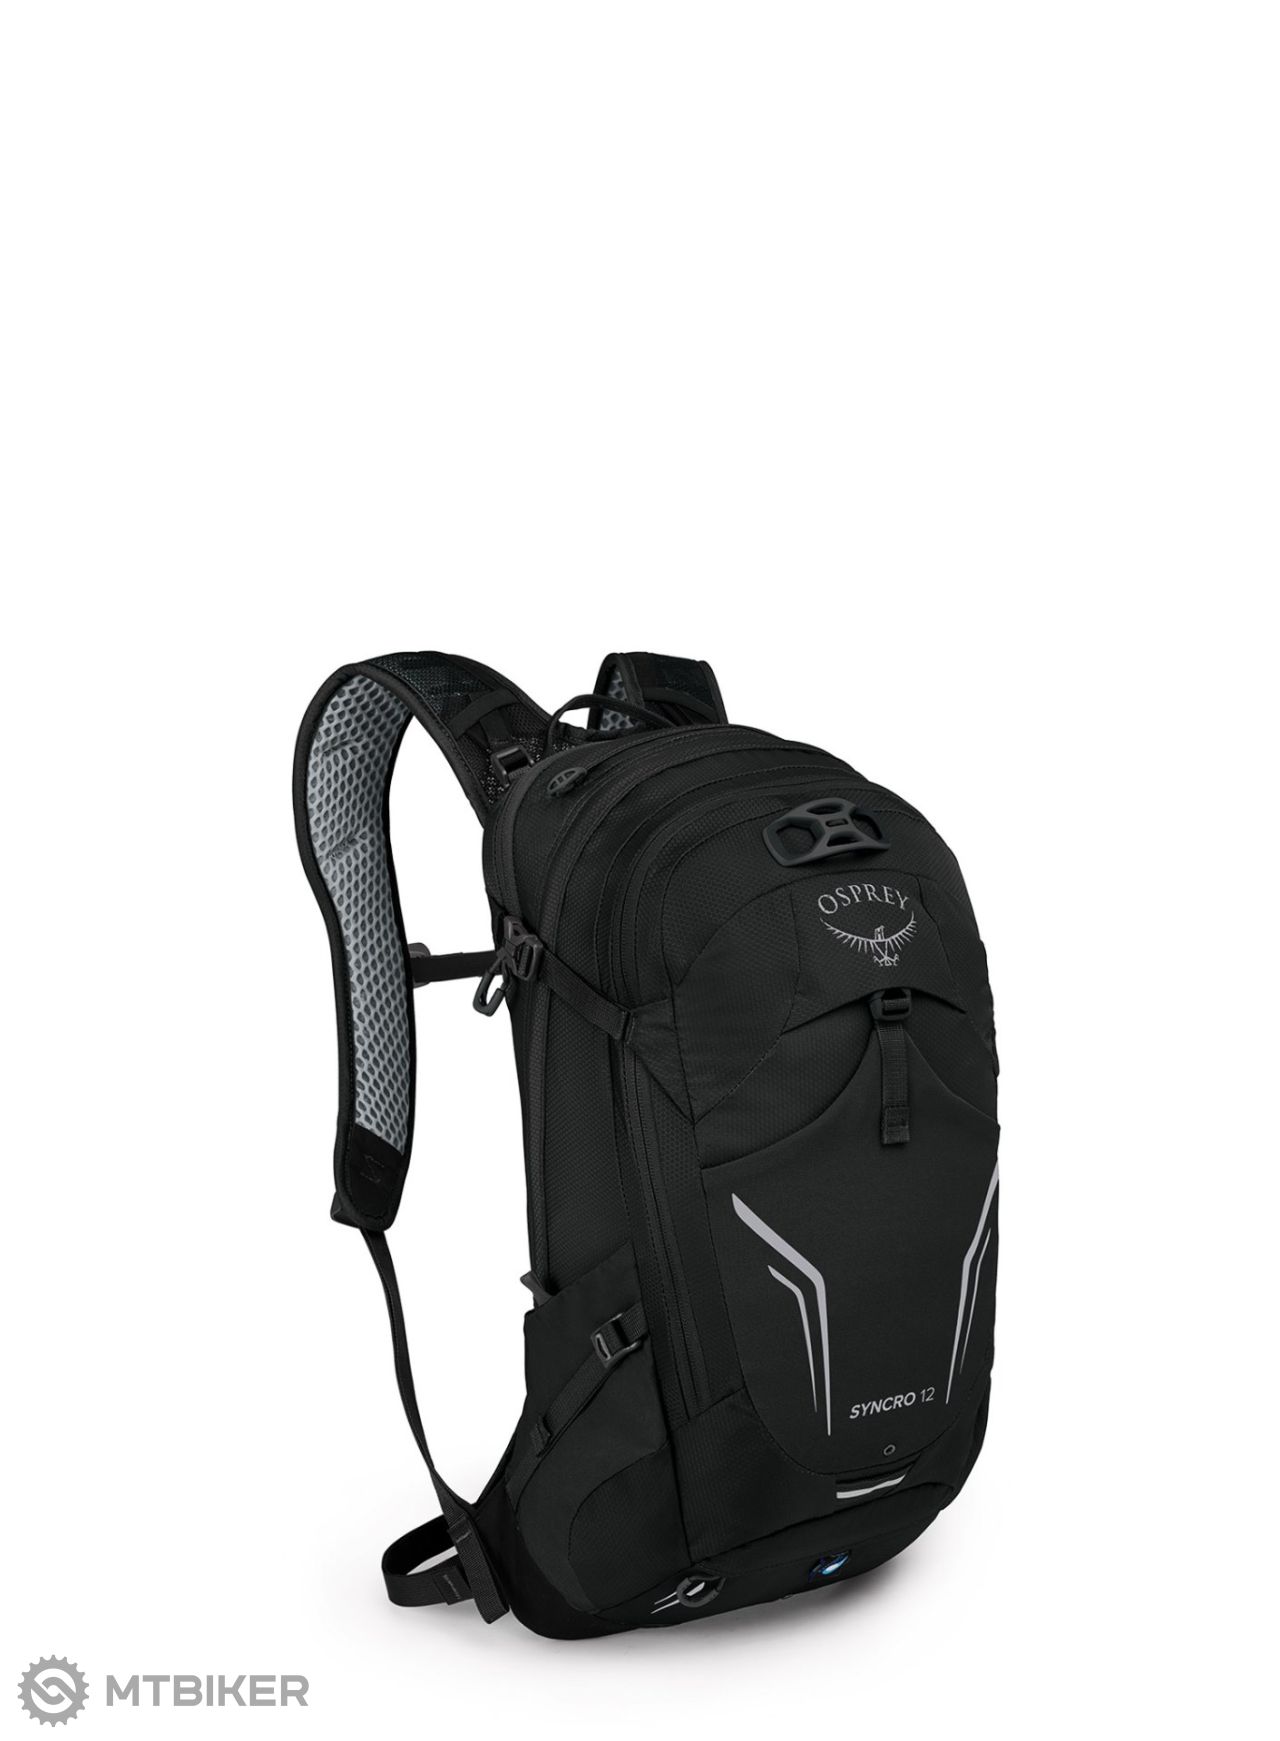 Osprey Syncro 12 backpack, 12 l, black